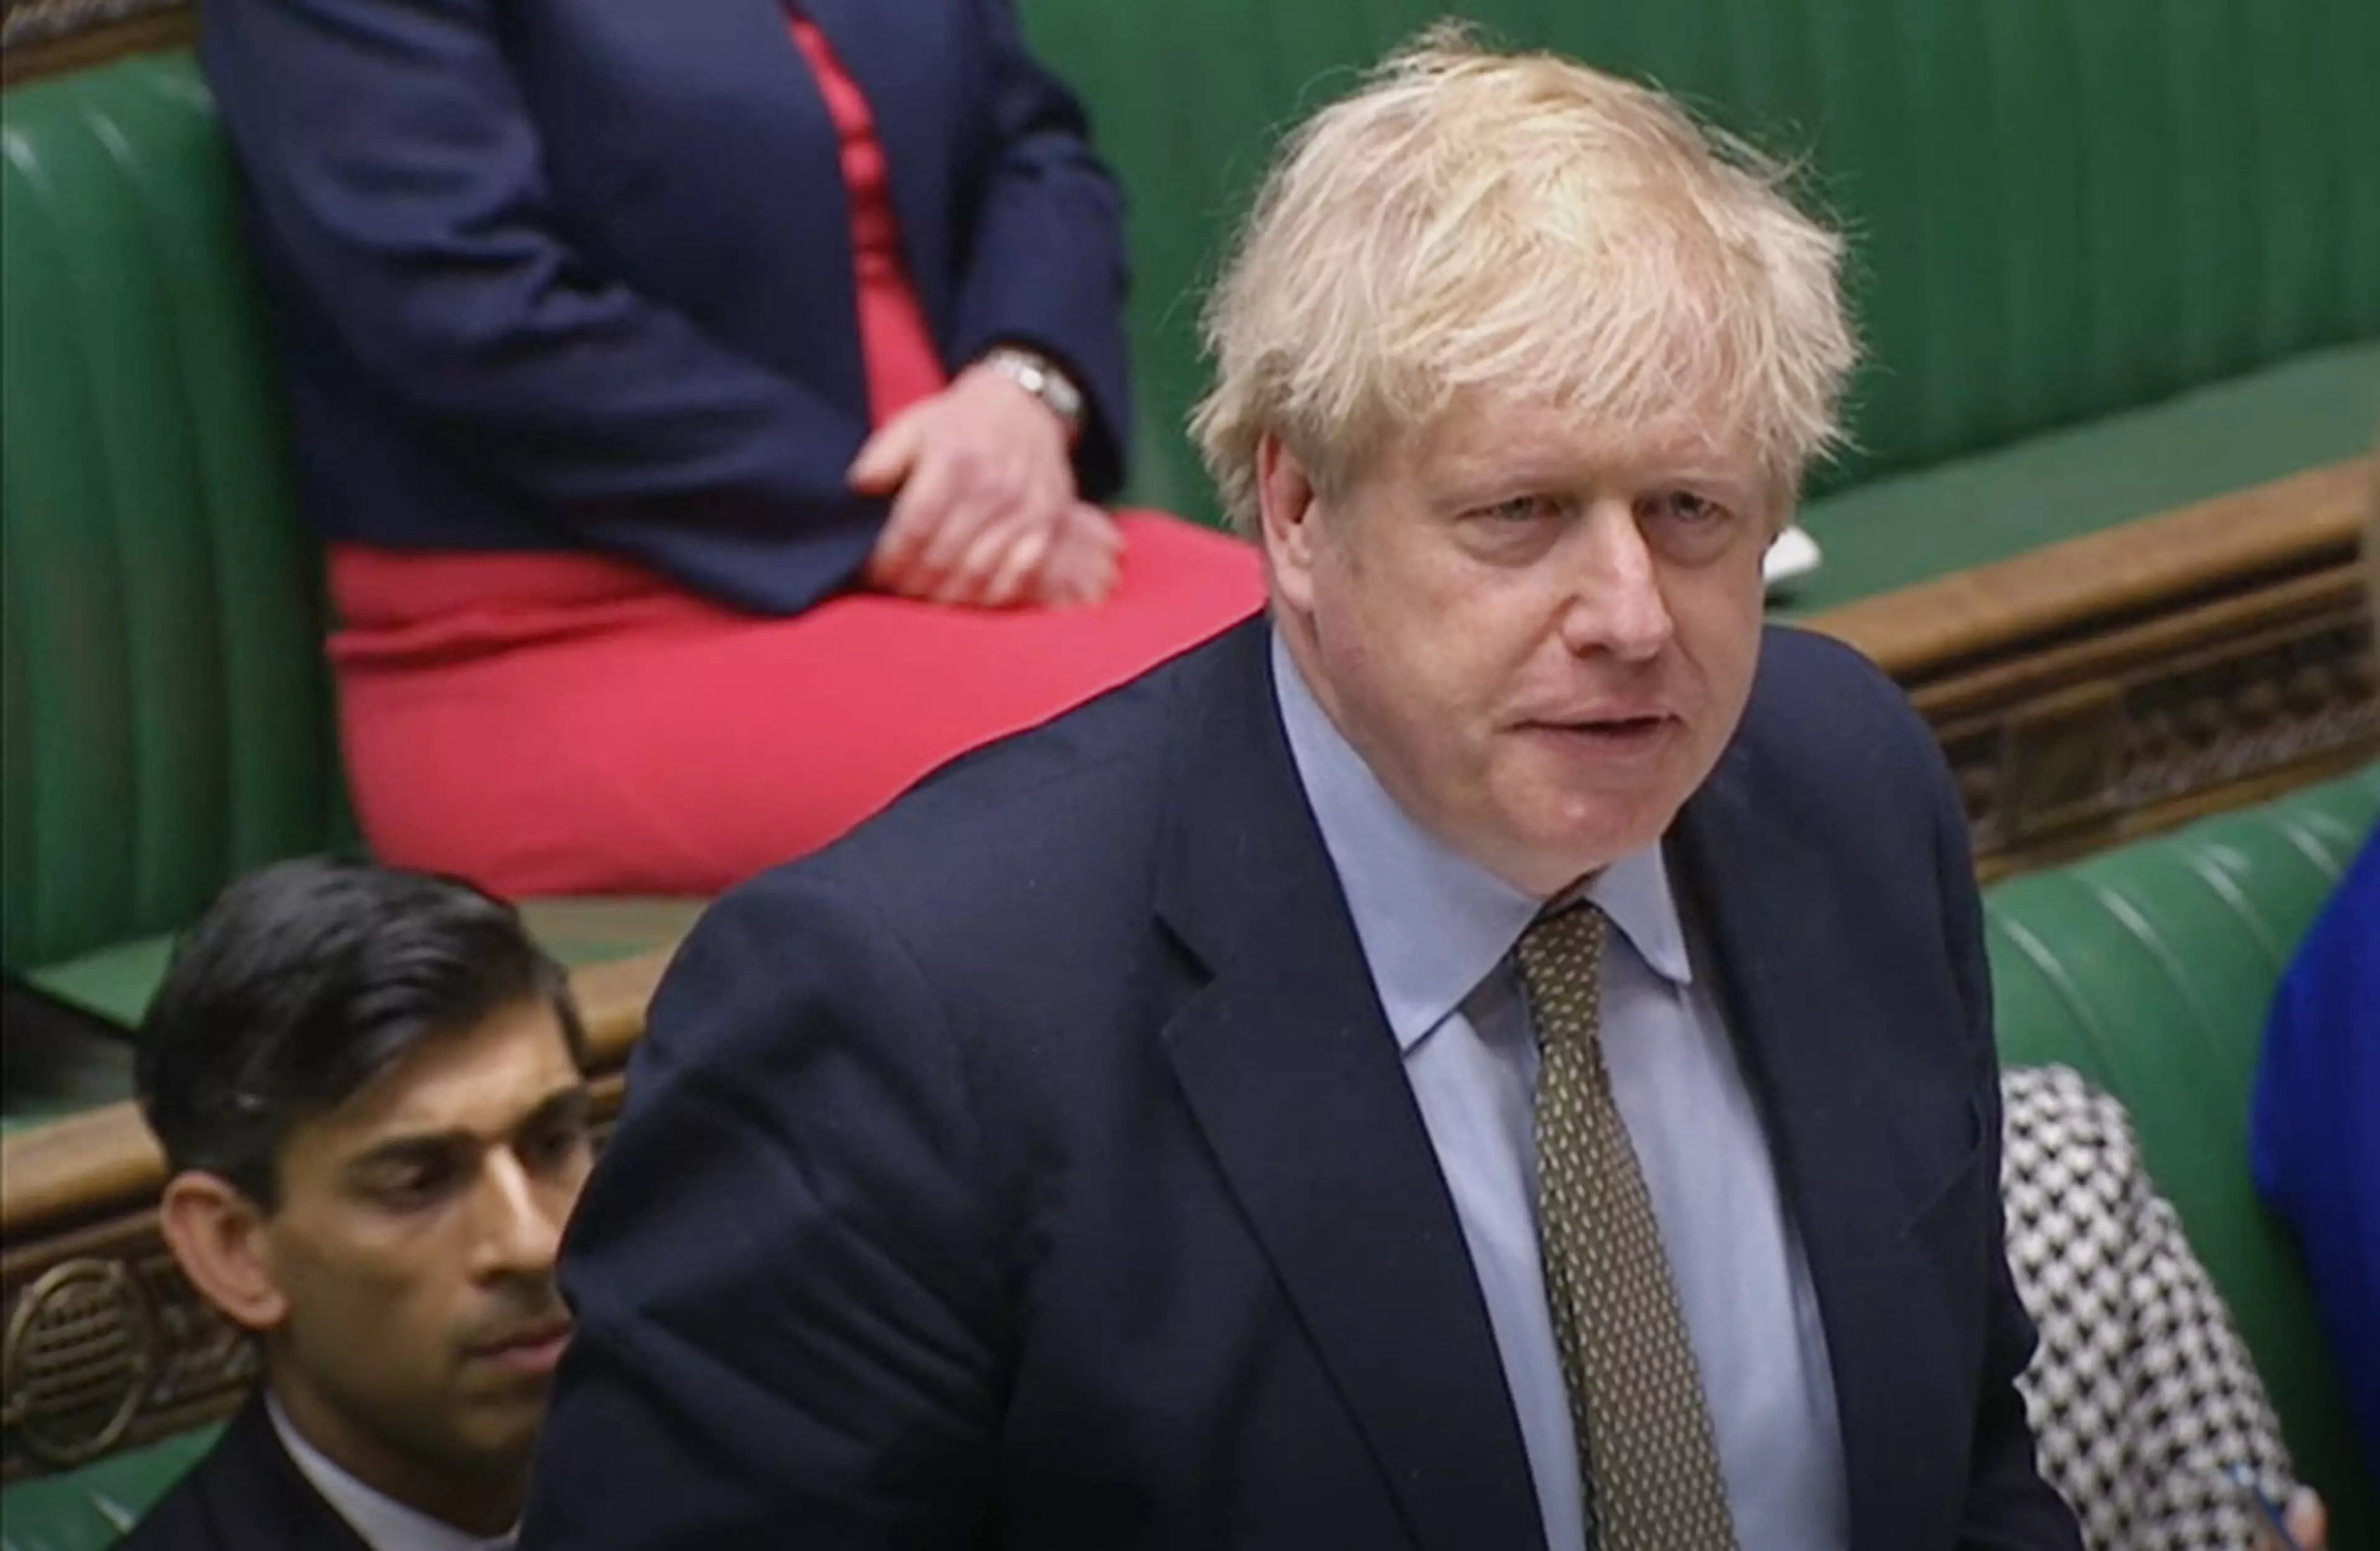 Prime Minister Boris Johnson put the UK on lockdown.